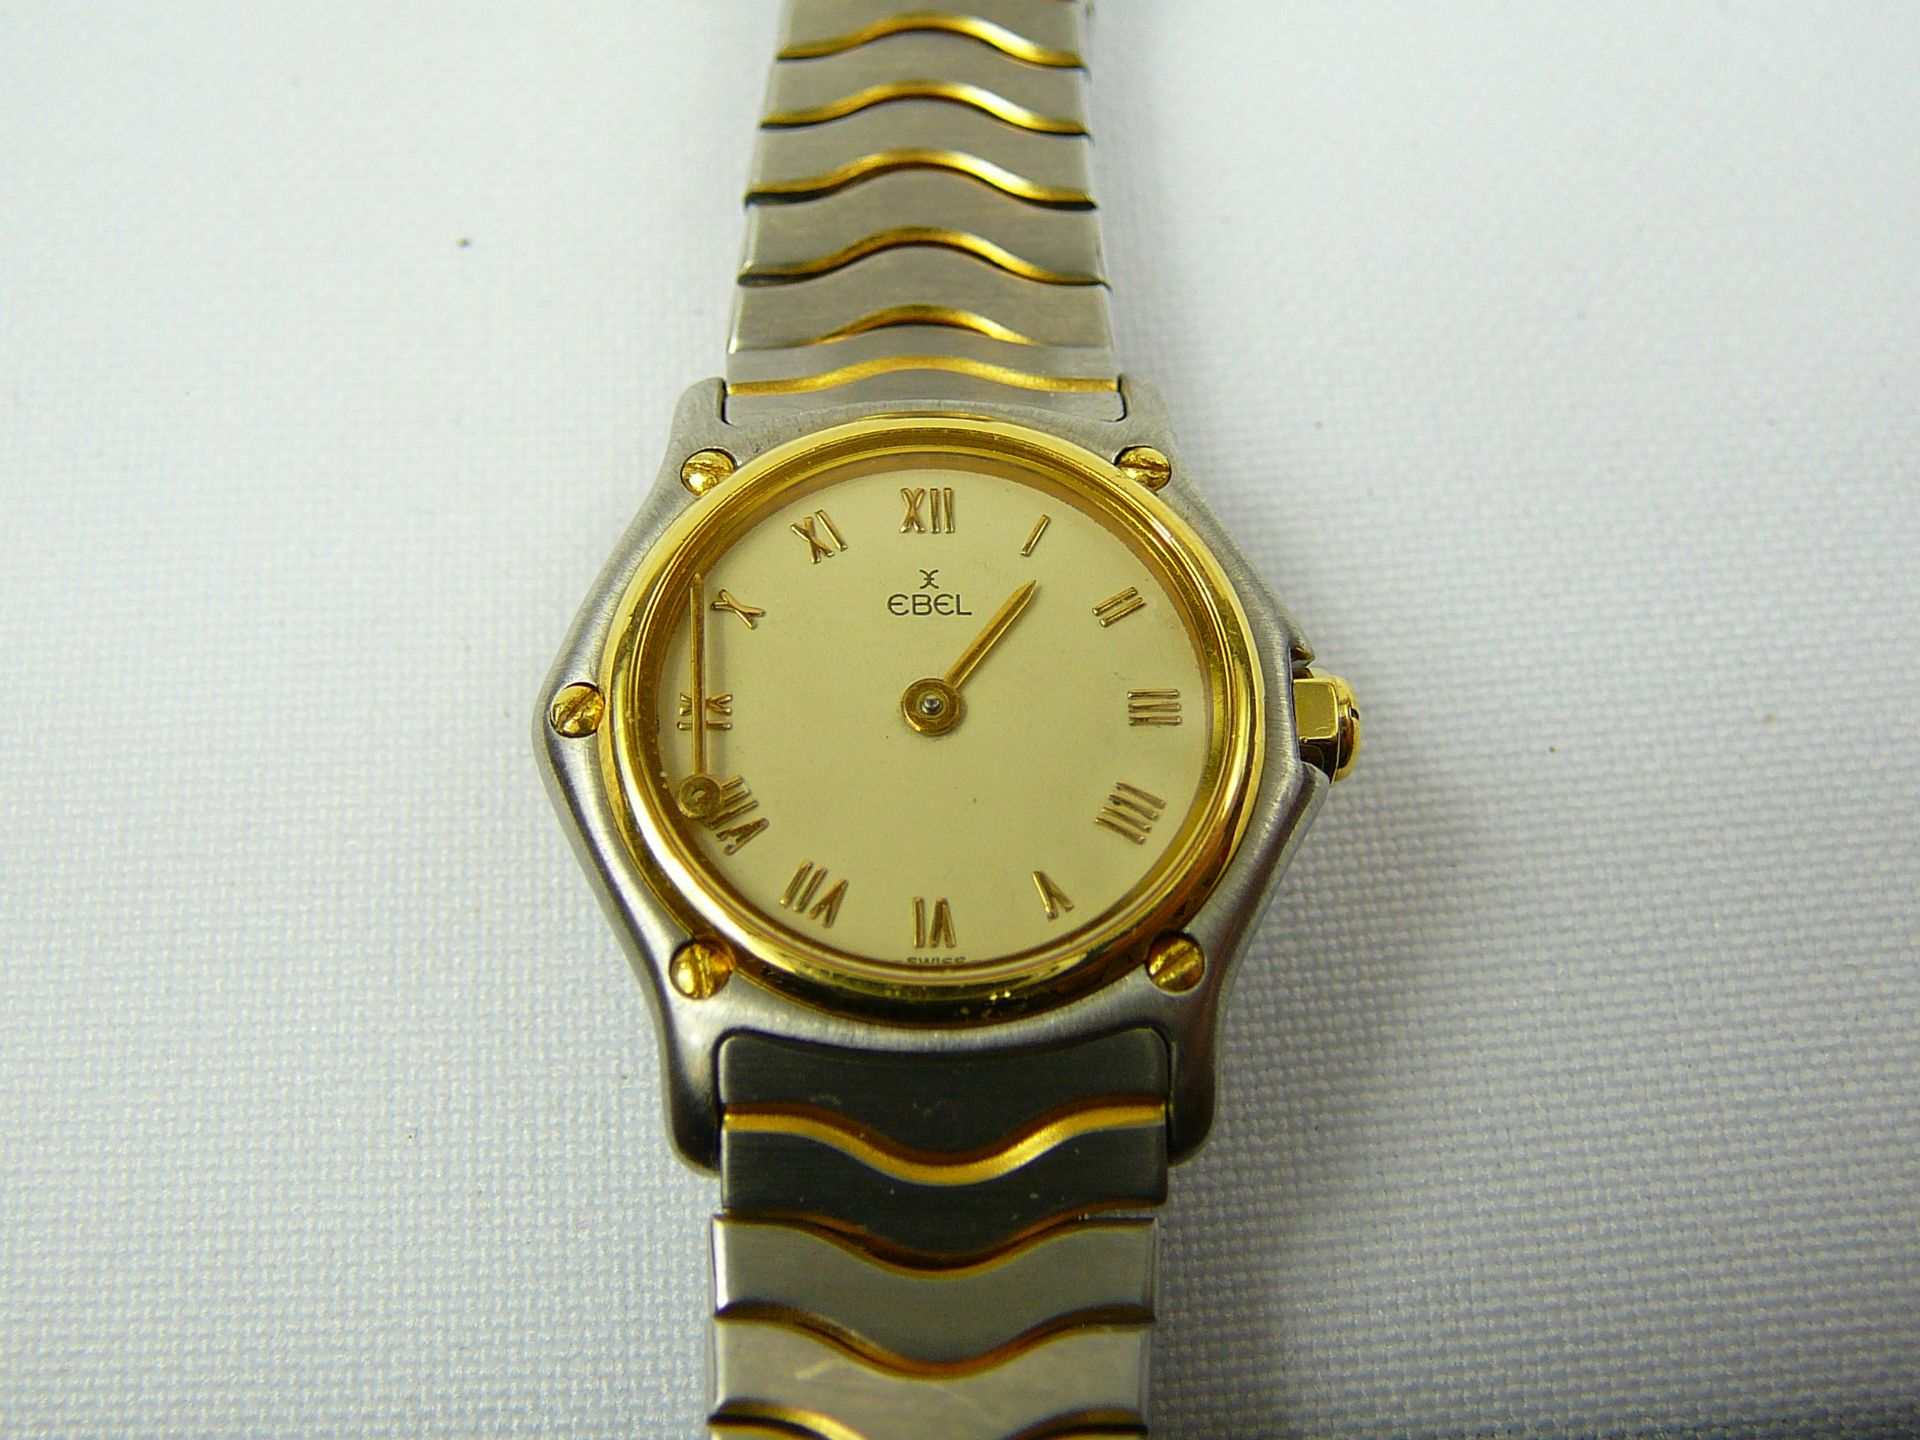 Ladies Ebel wrist watch - Image 2 of 3